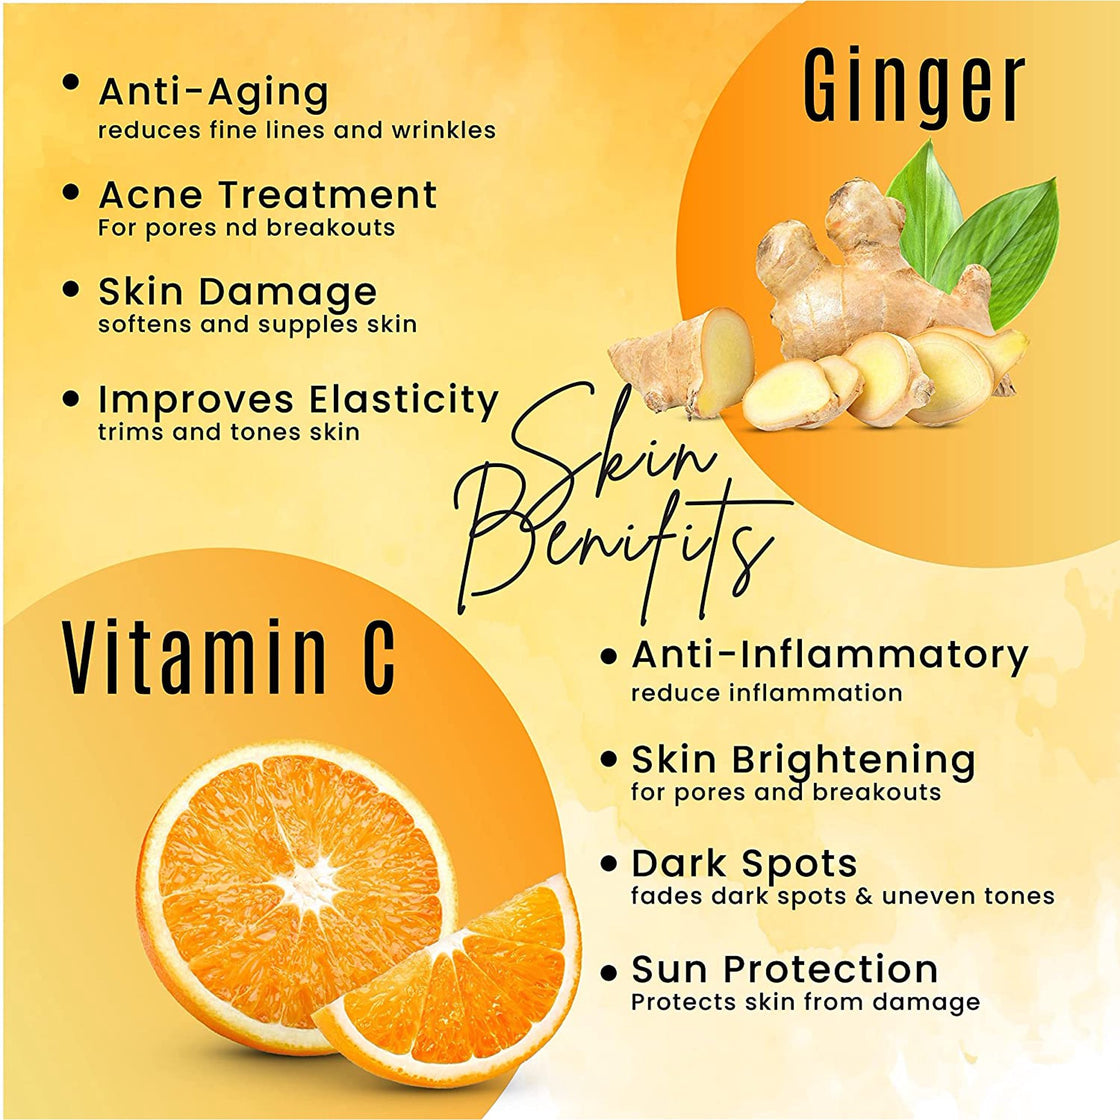 Ginger Face Serum + Vitamin C + Turmeric, Organic Acne Treatment, Clear skin Tone, Hydrate Dull & Dry Skin, Anti-Aging Facial Serum - 1 FL OZ